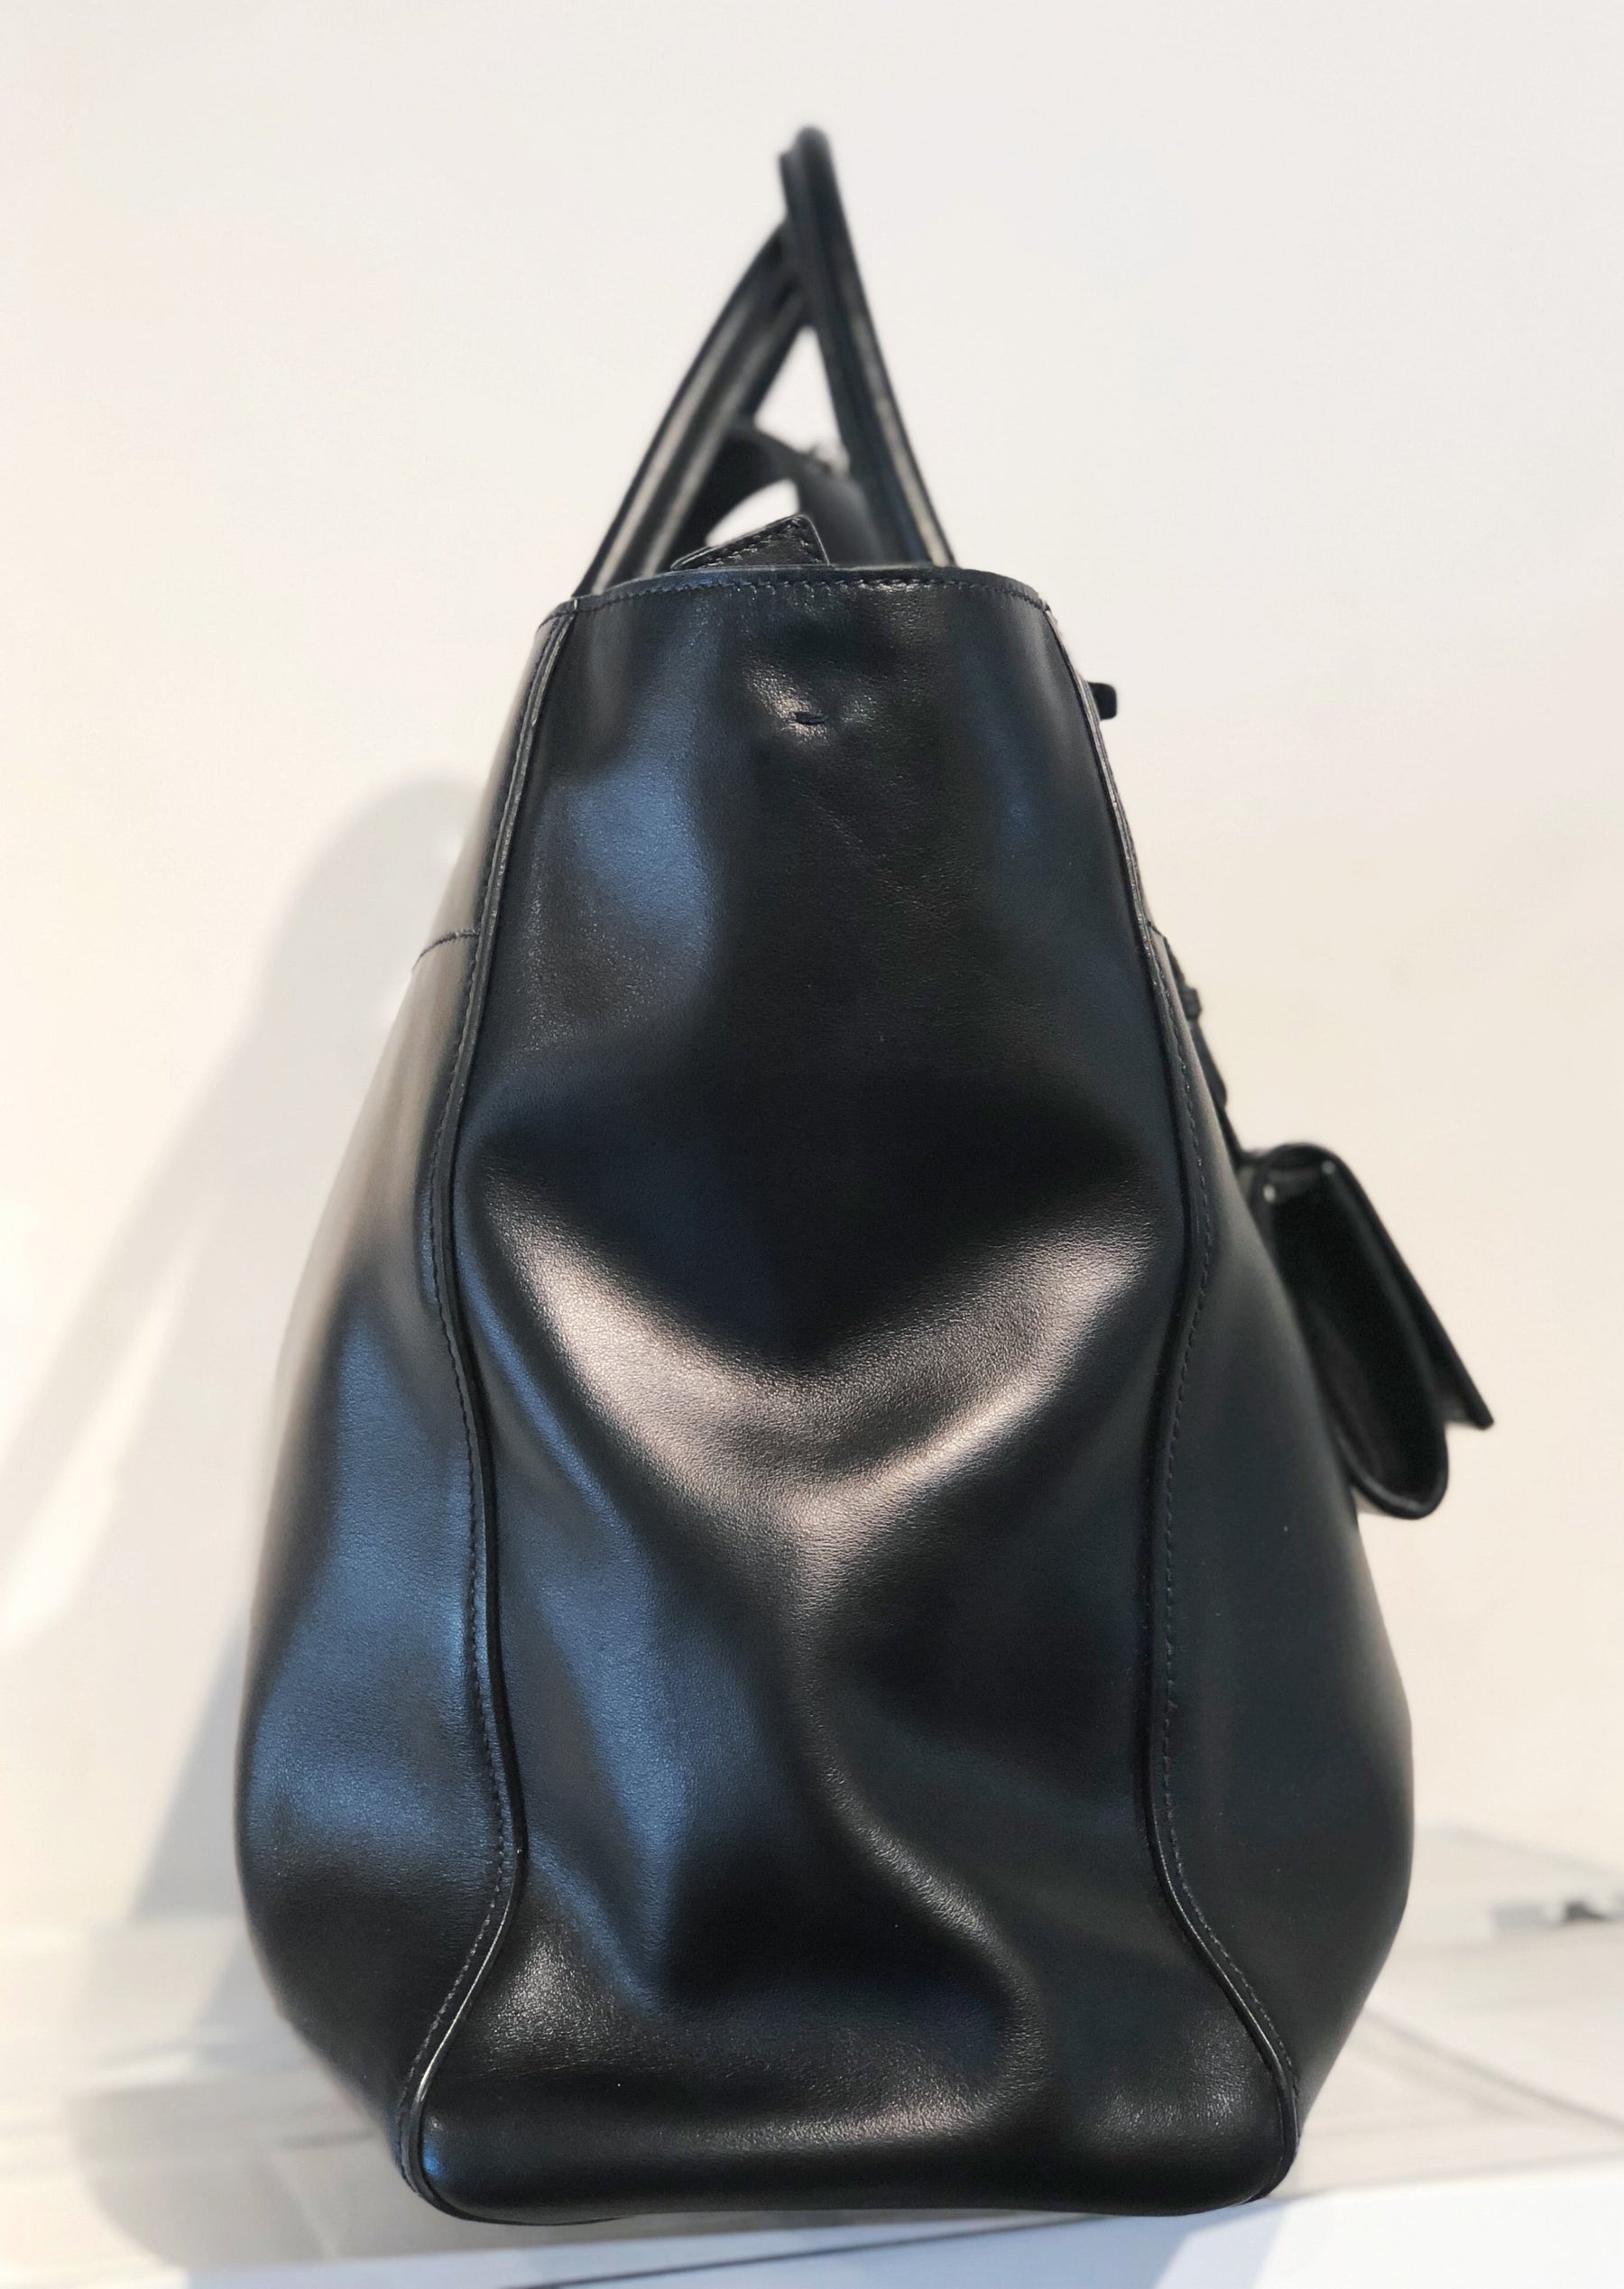 Prada Leather Tote Bag Black